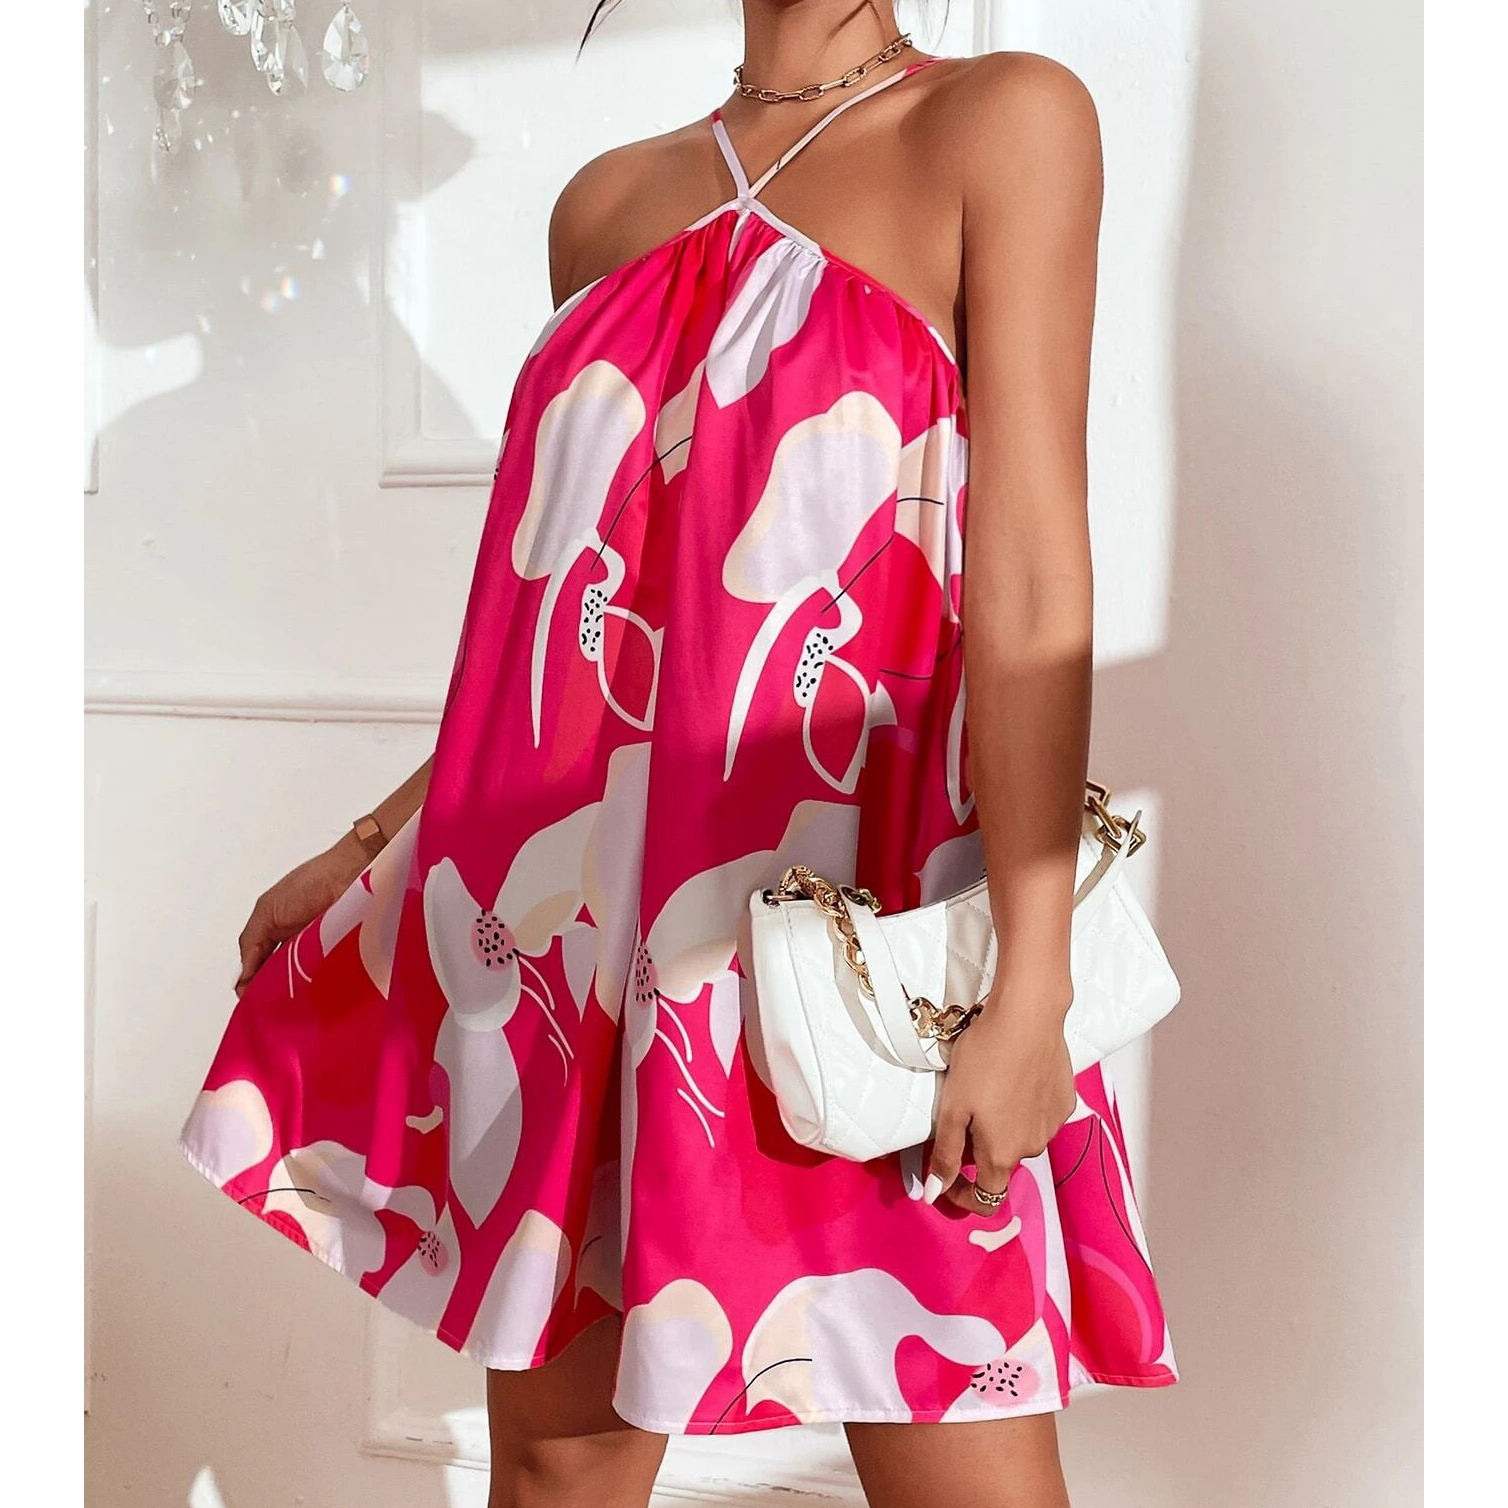 Allover Print Cami Dress - Hot Pink, Small(4)